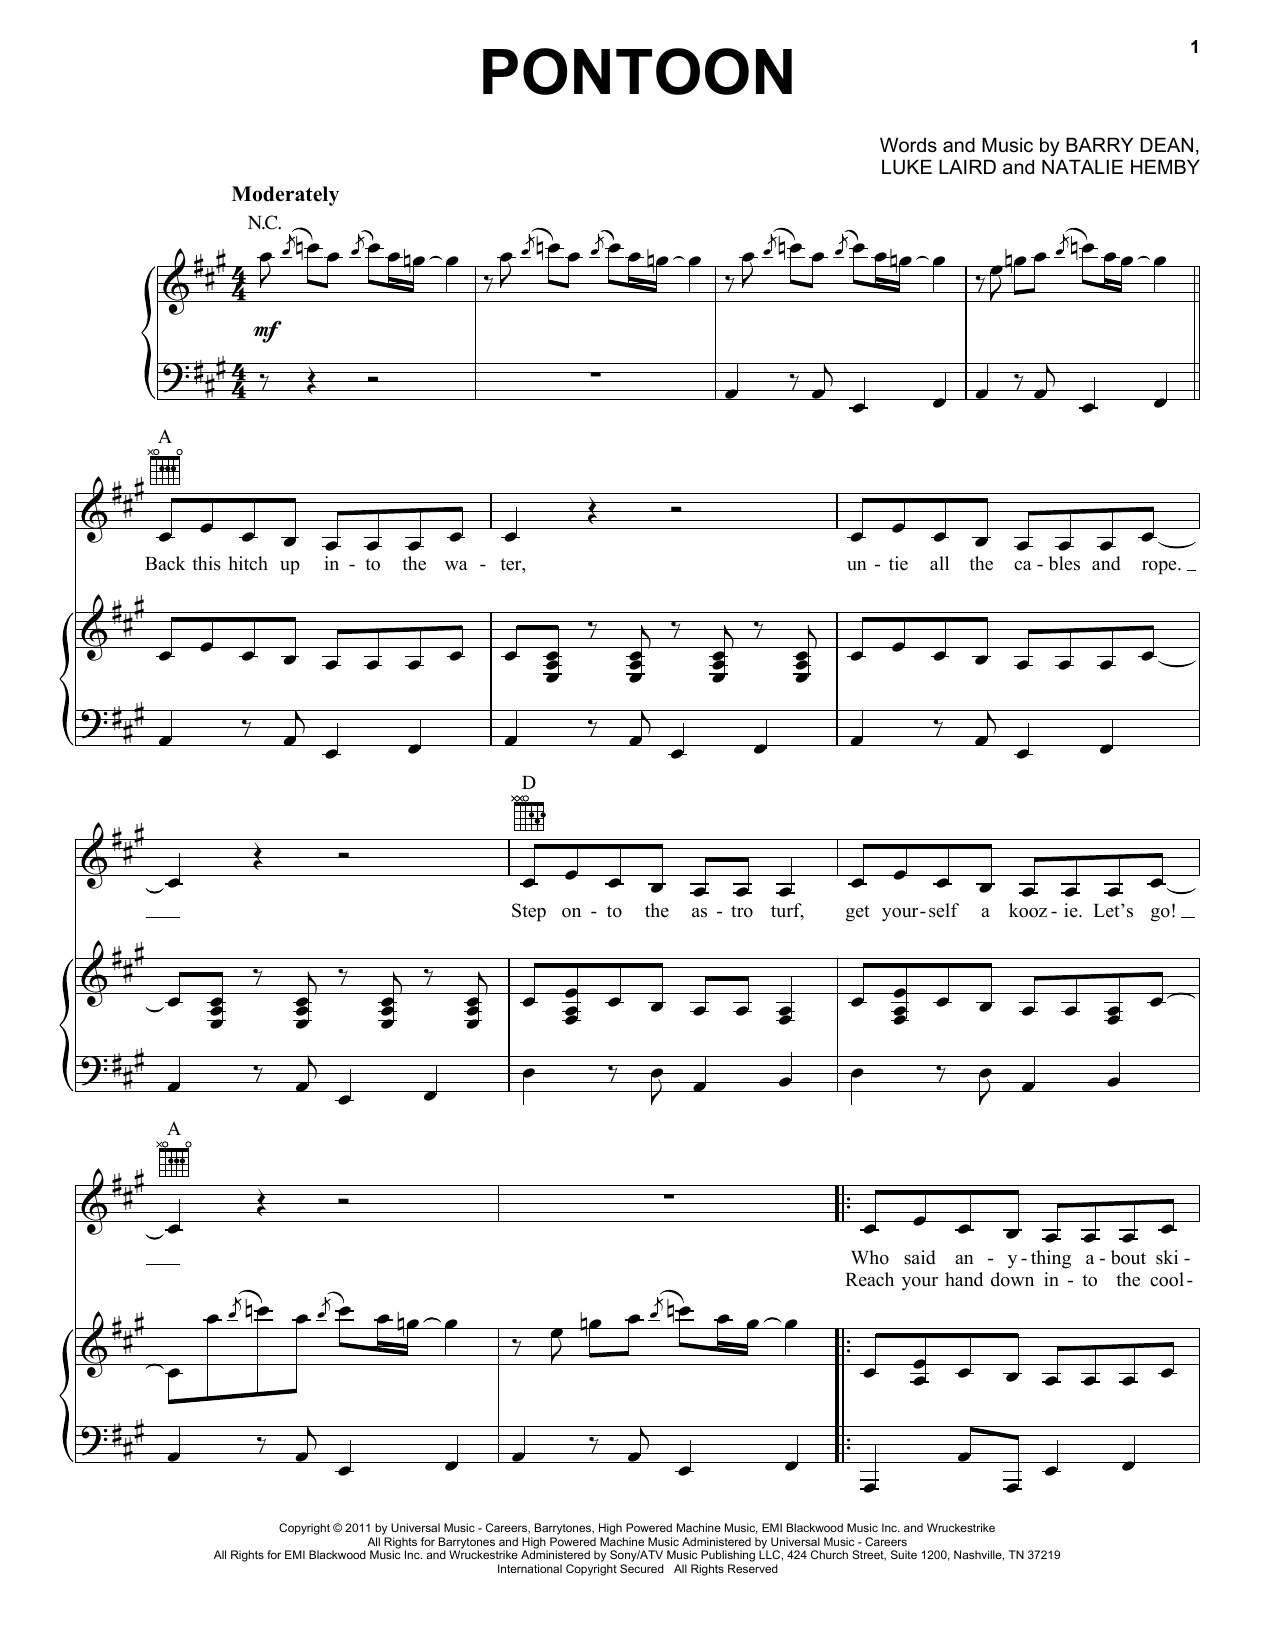 Little Big Town "Pontoon" Sheet Music PDF Notes, Chords Pop Score